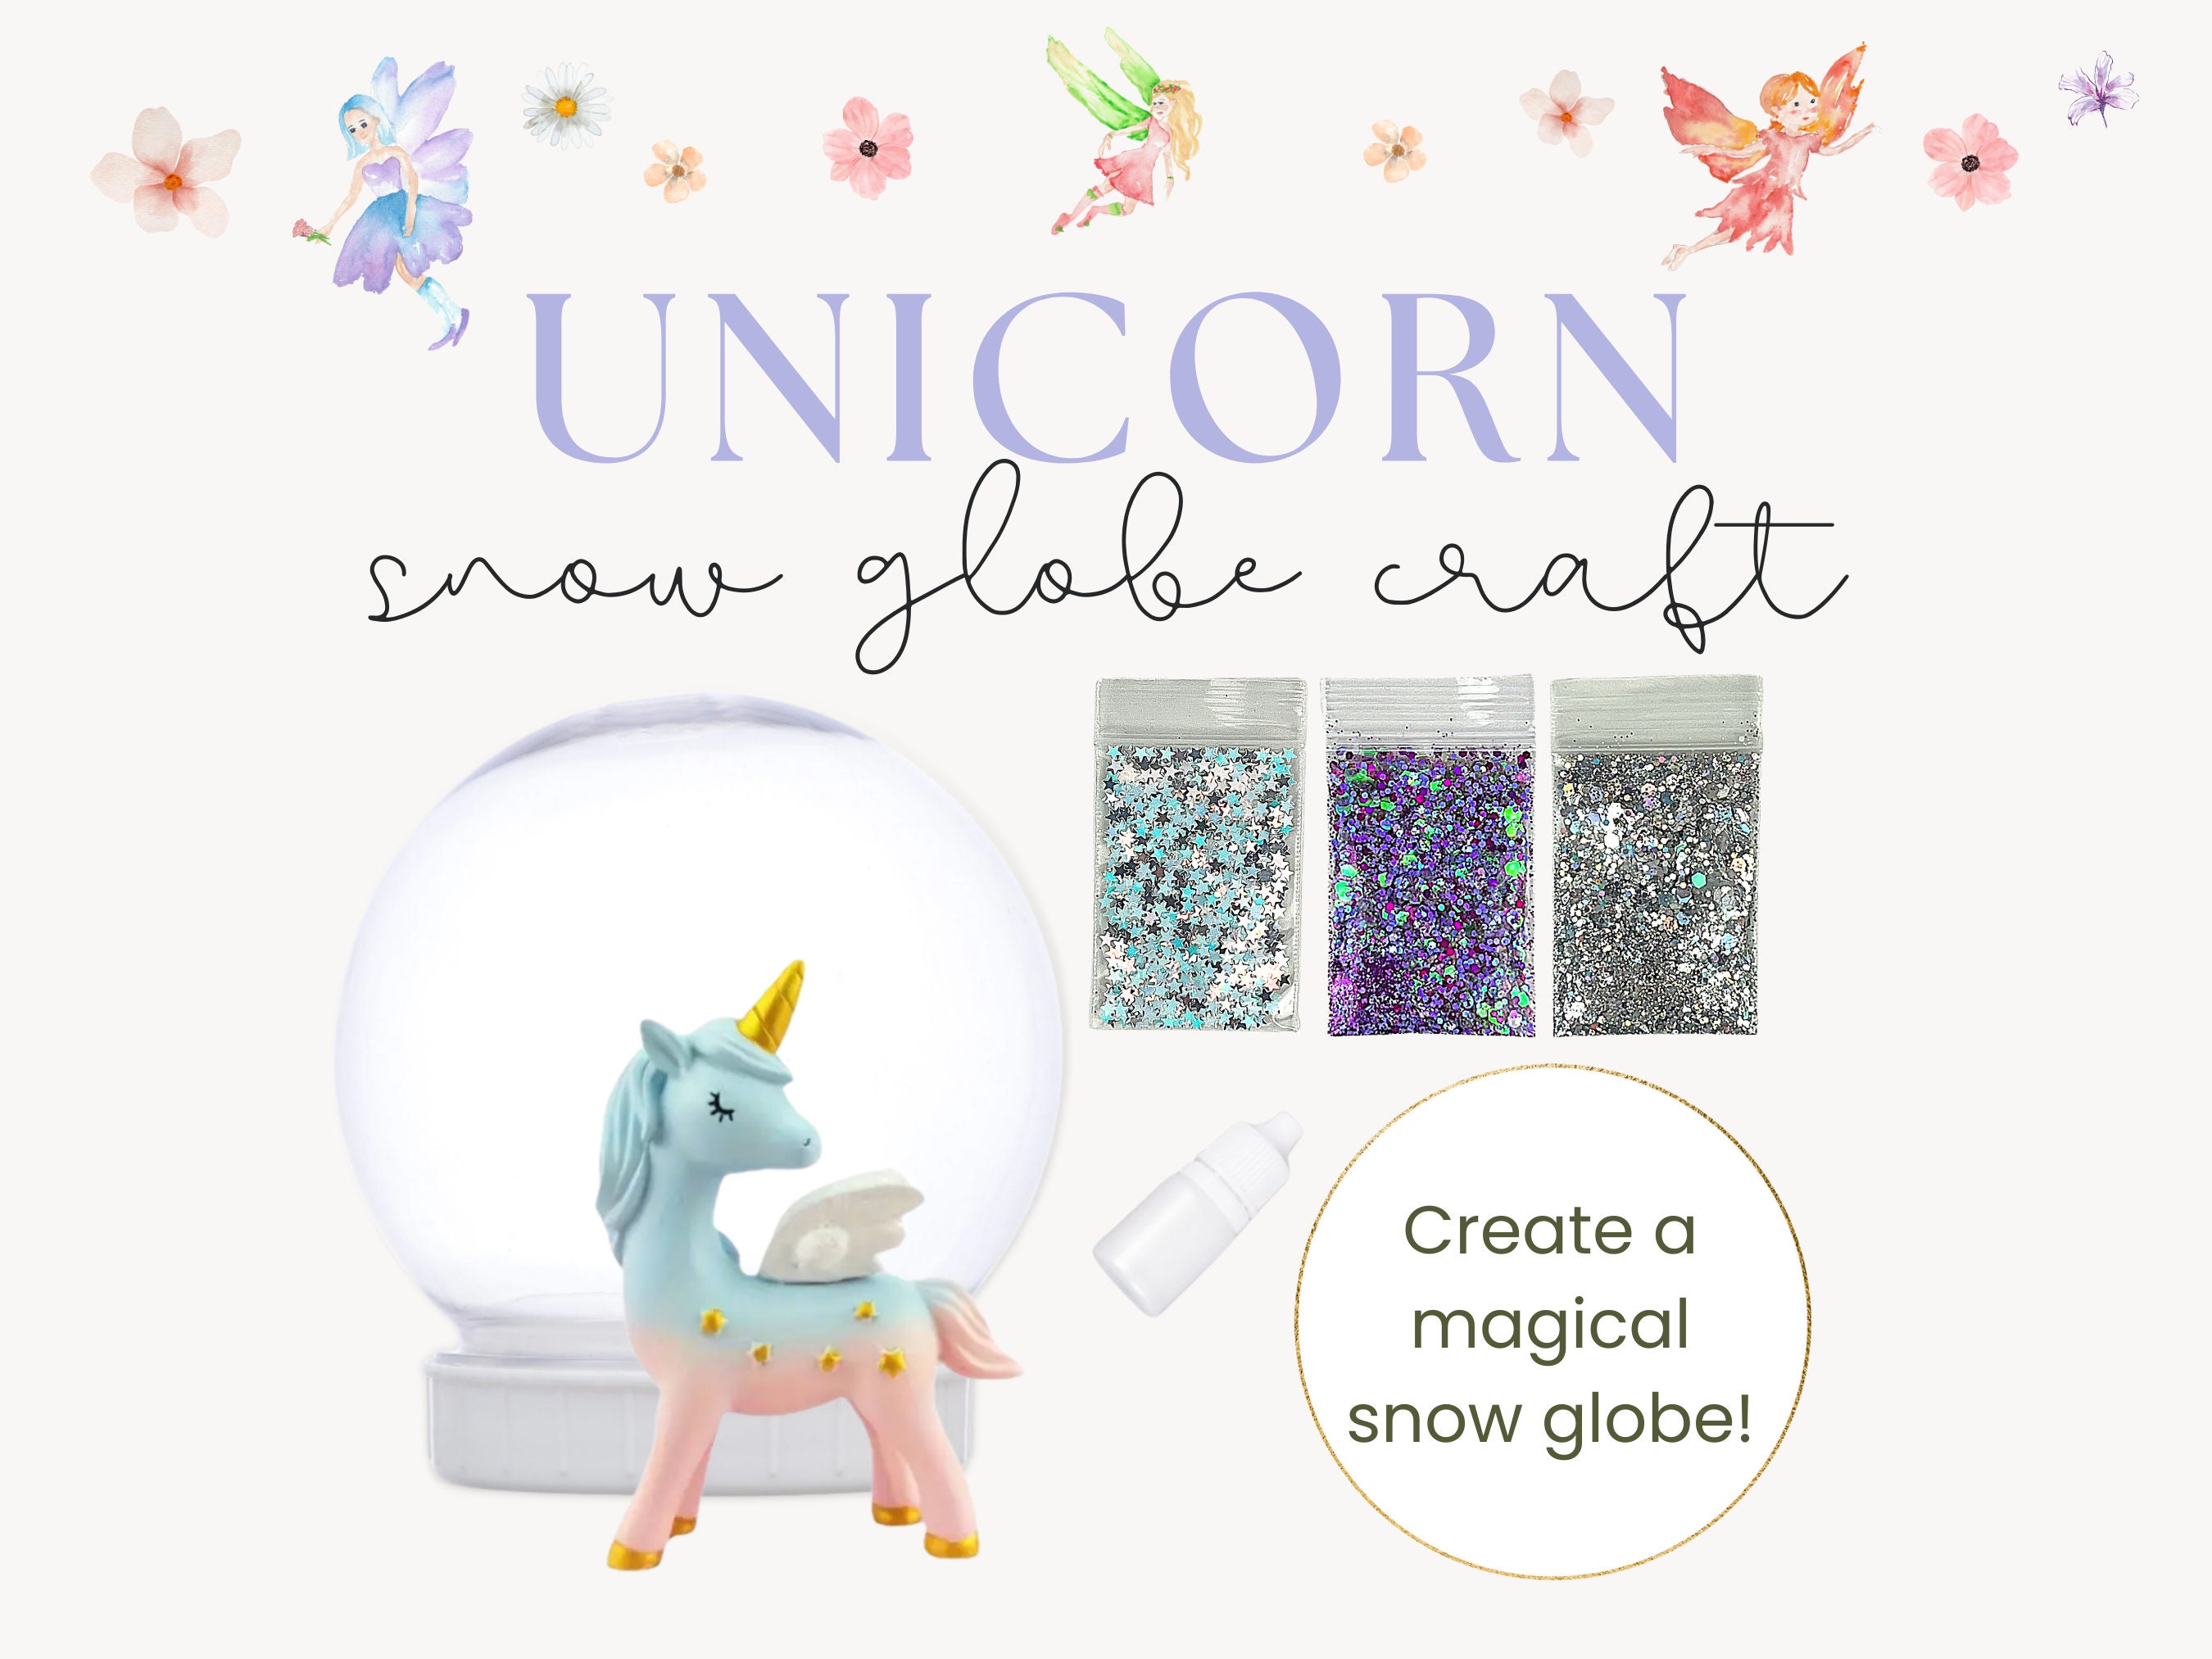 Glitter Slime W/ Unicorn Figures - Imagine That Toys